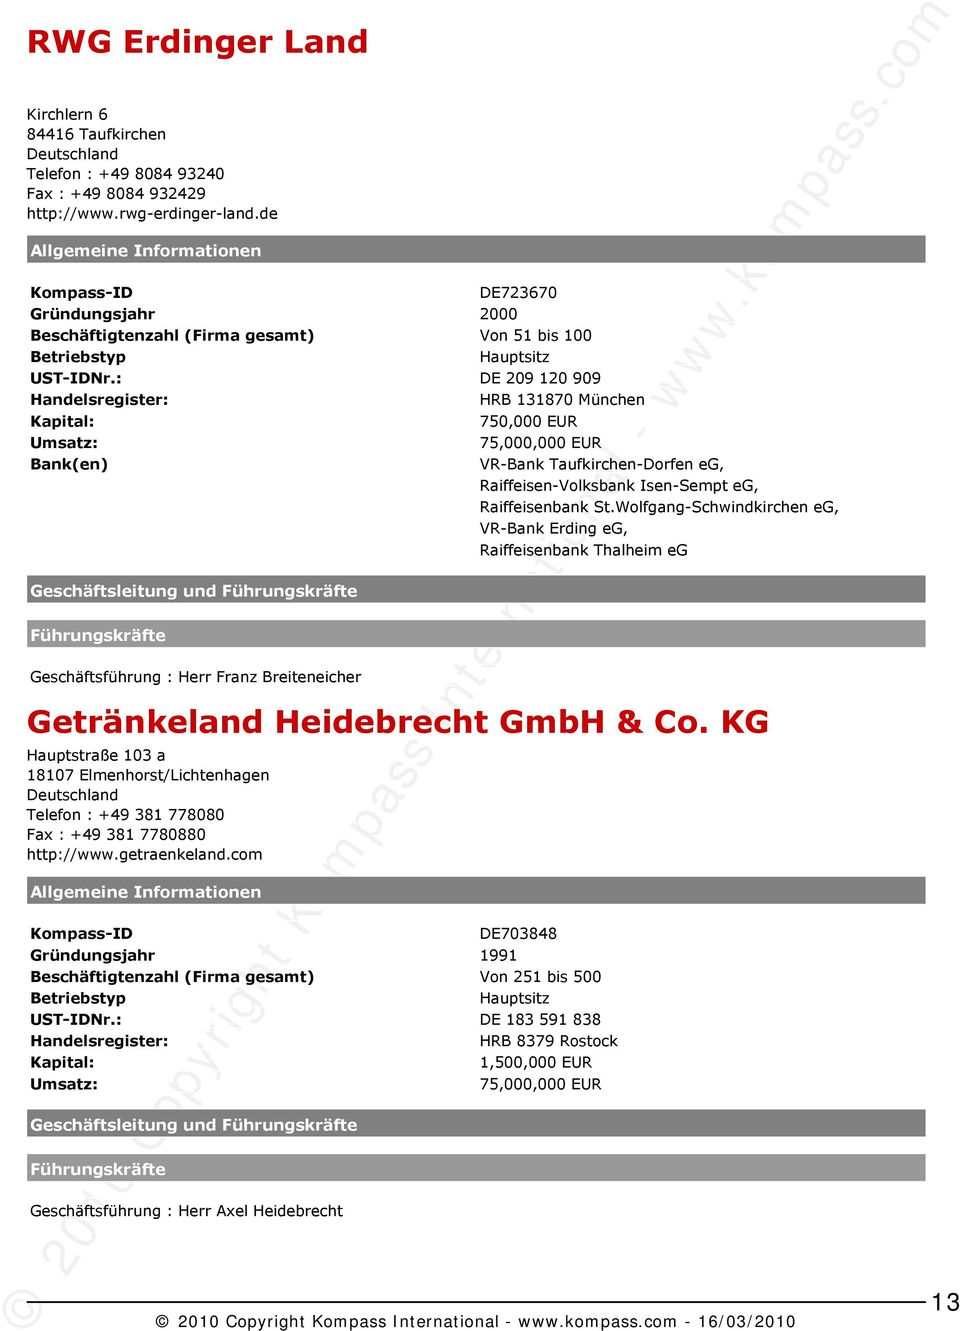 : DE 209 120 909 HRB 131870 München 750,000 EUR 75,000,000 EUR Bank(en) VR-Bank Taufkirchen-Dorfen eg, Raiffeisen-Volksbank Isen-Sempt eg, Raiffeisenbank St.